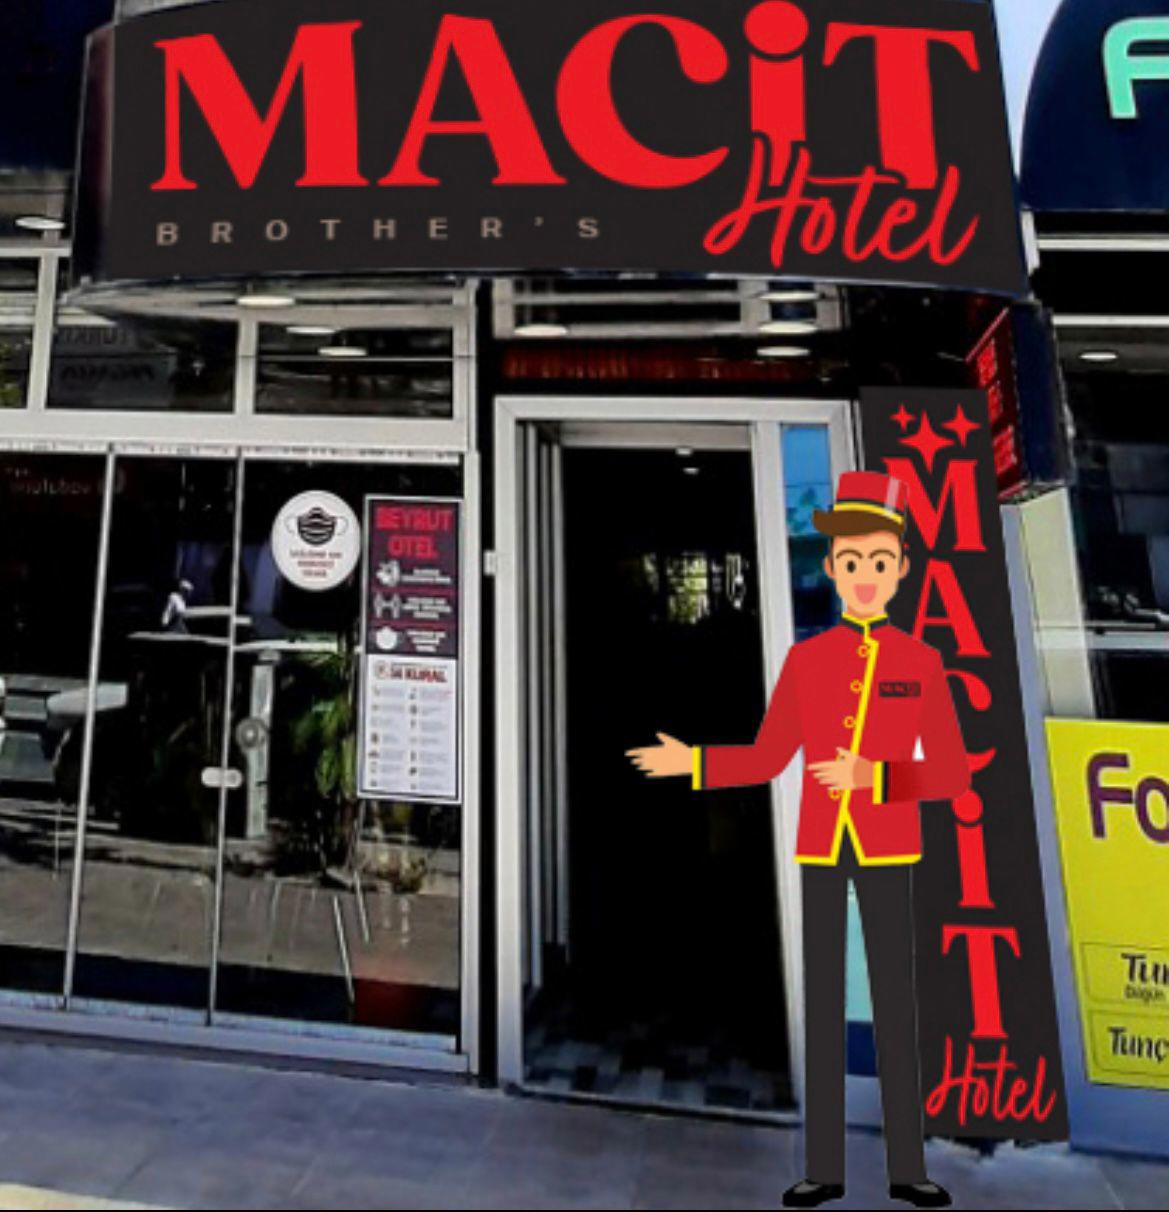 Macit Hotel